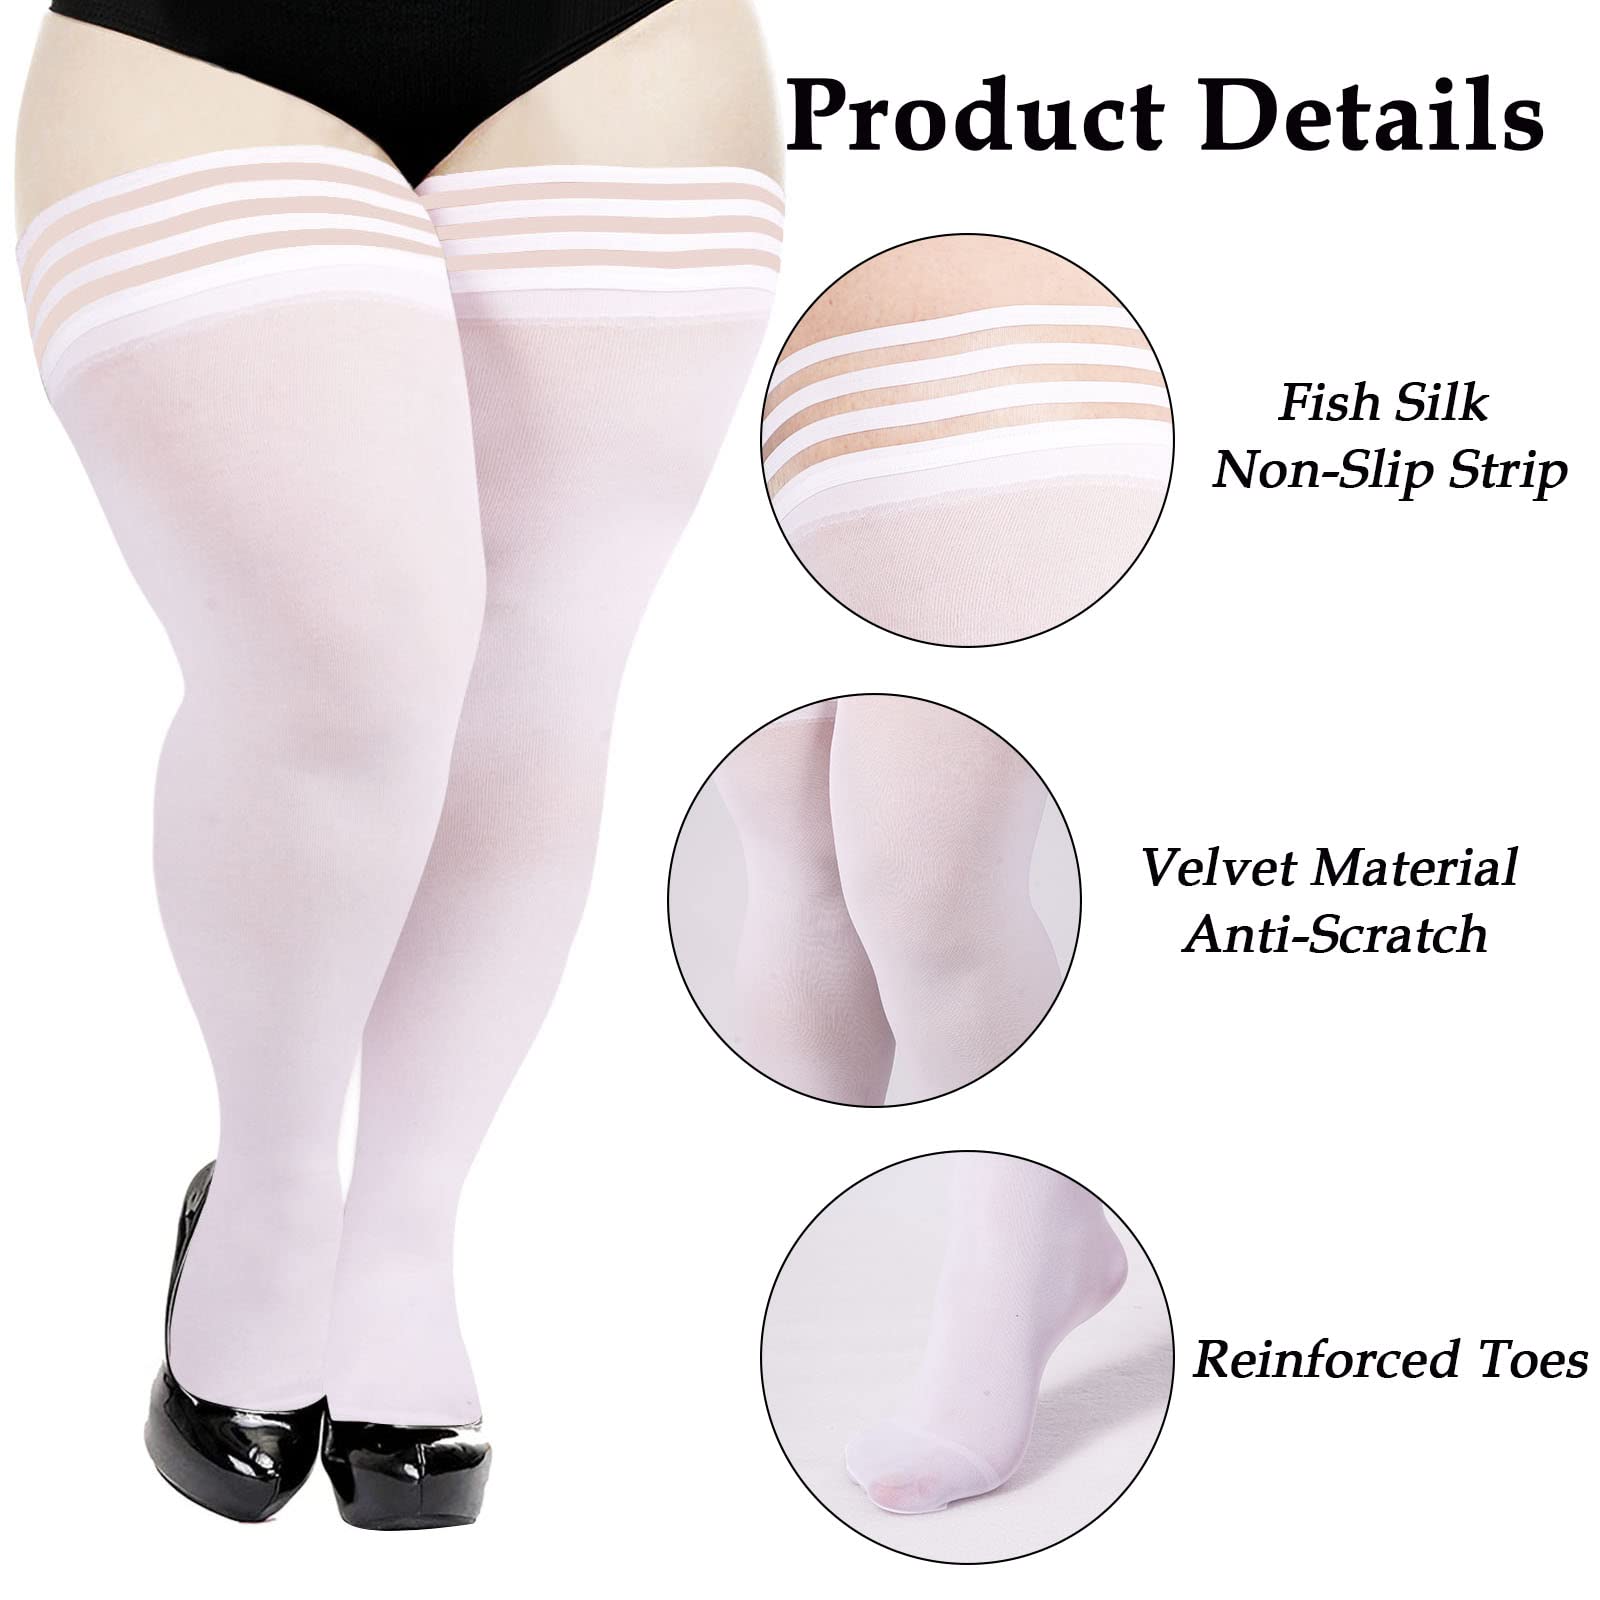 55D Semi Sheer Thigh Highs Stockings for Women - White - Moon Wood